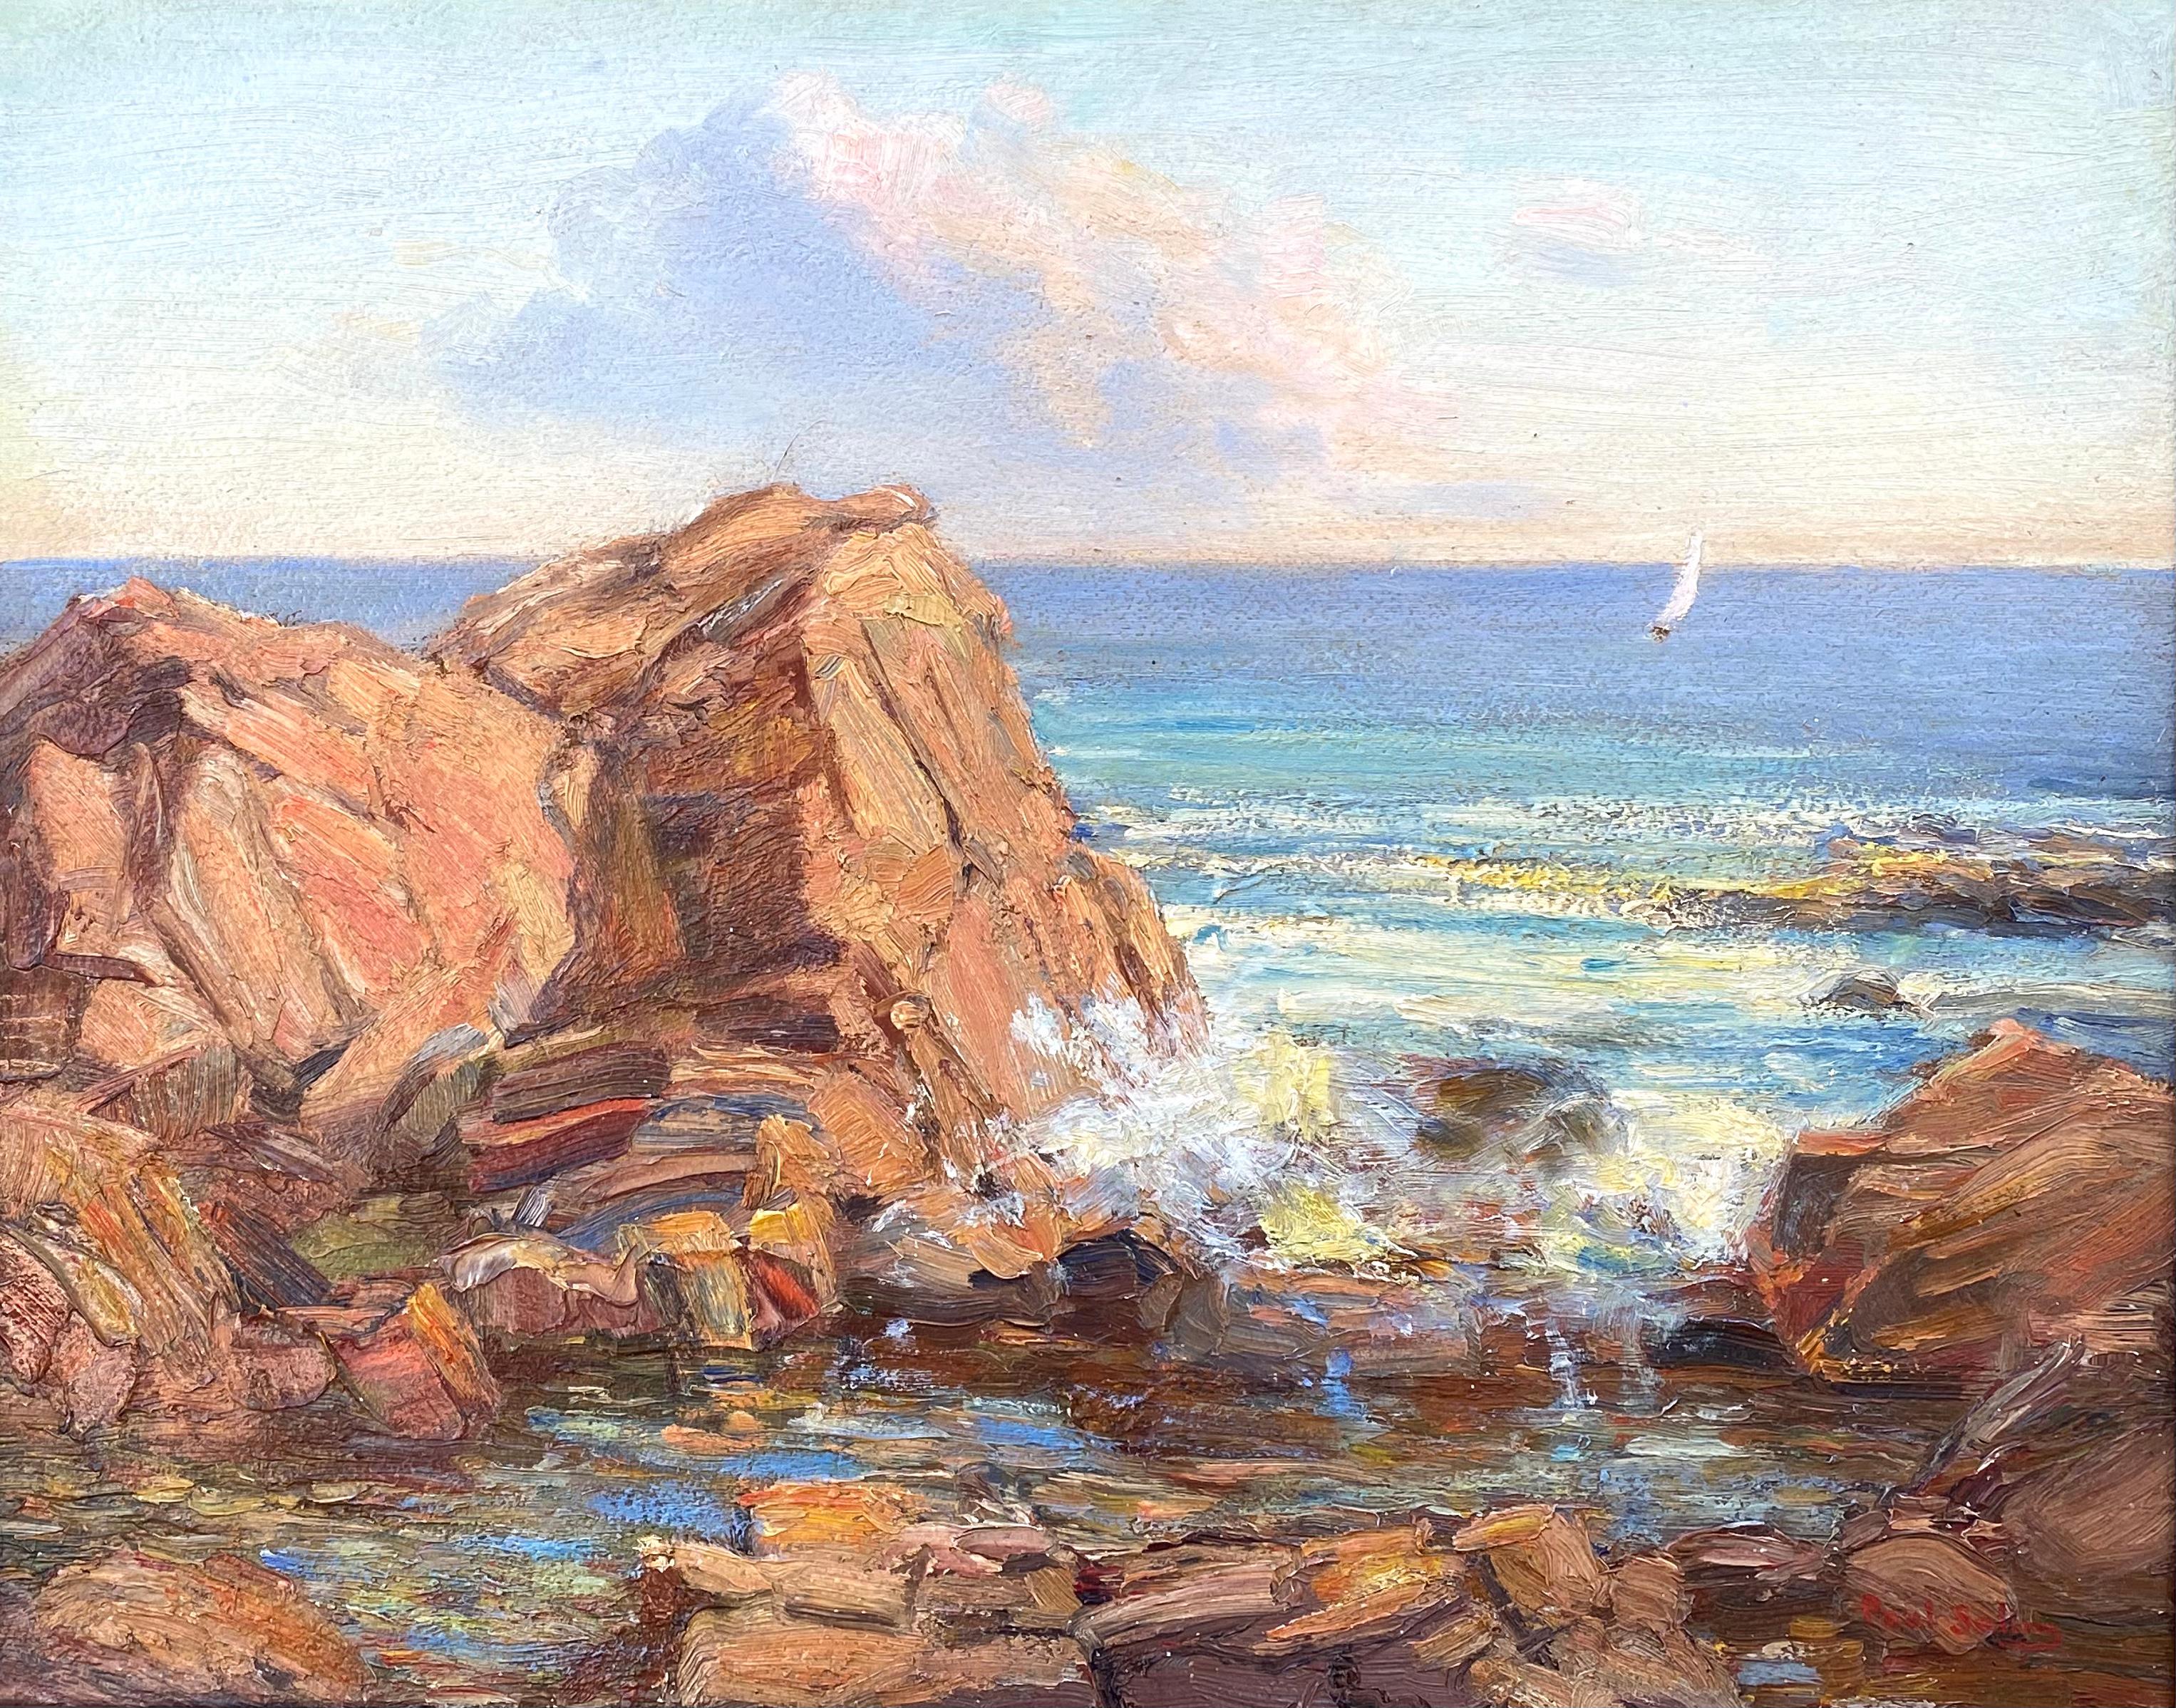 Paul E. Saling Landscape Painting - “Sailing off the Rocky Coast”